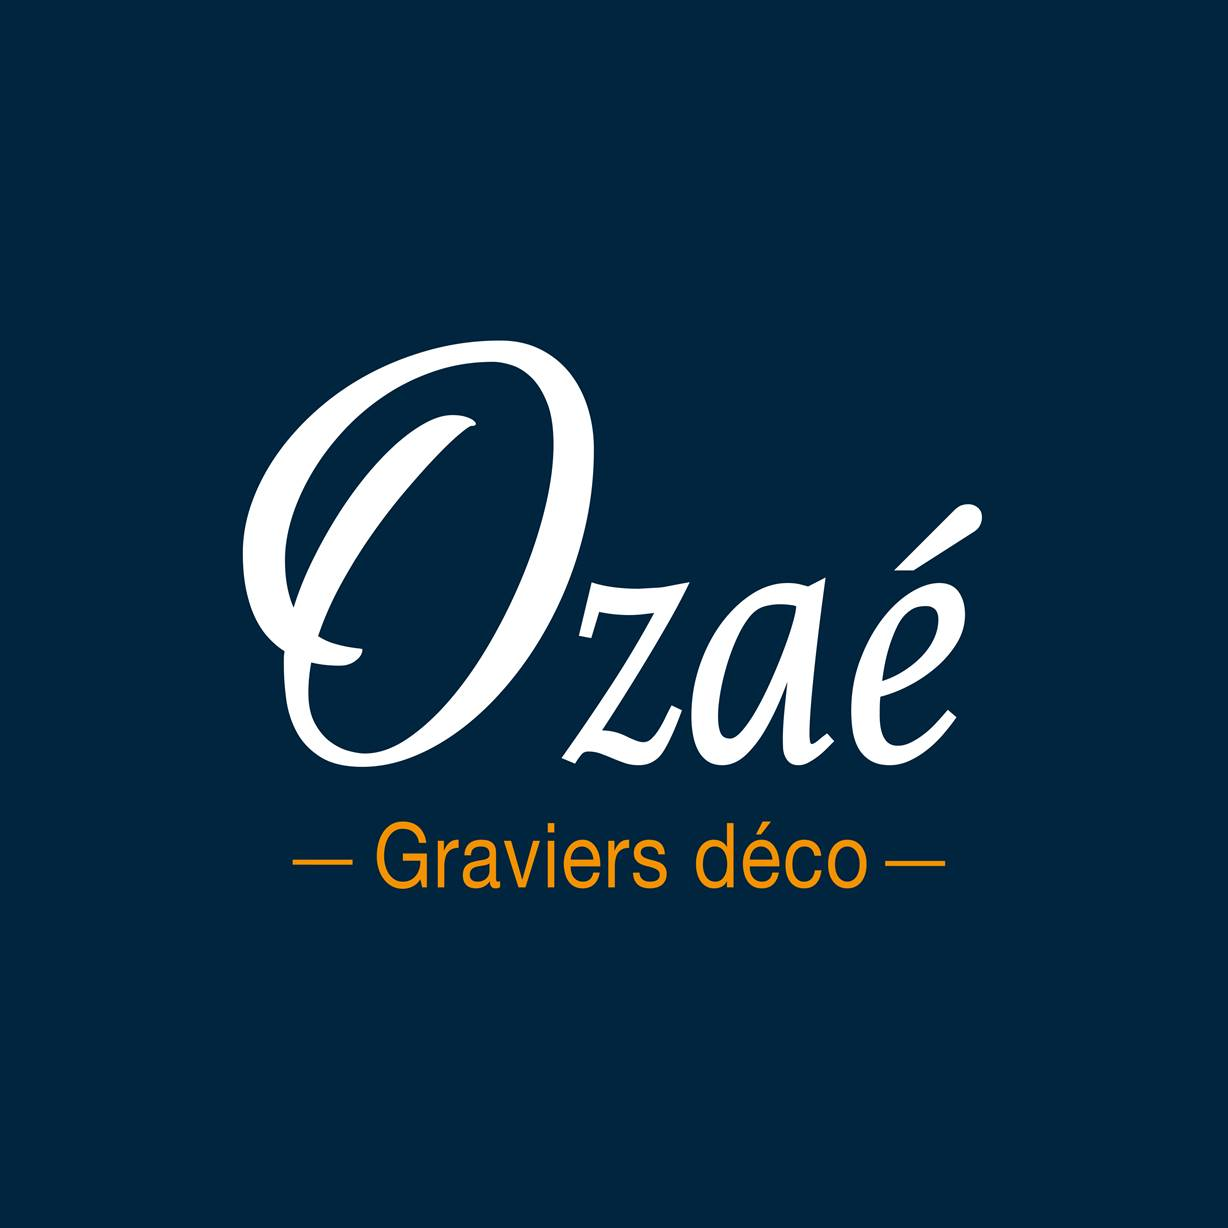 OZAE - Graviers déco